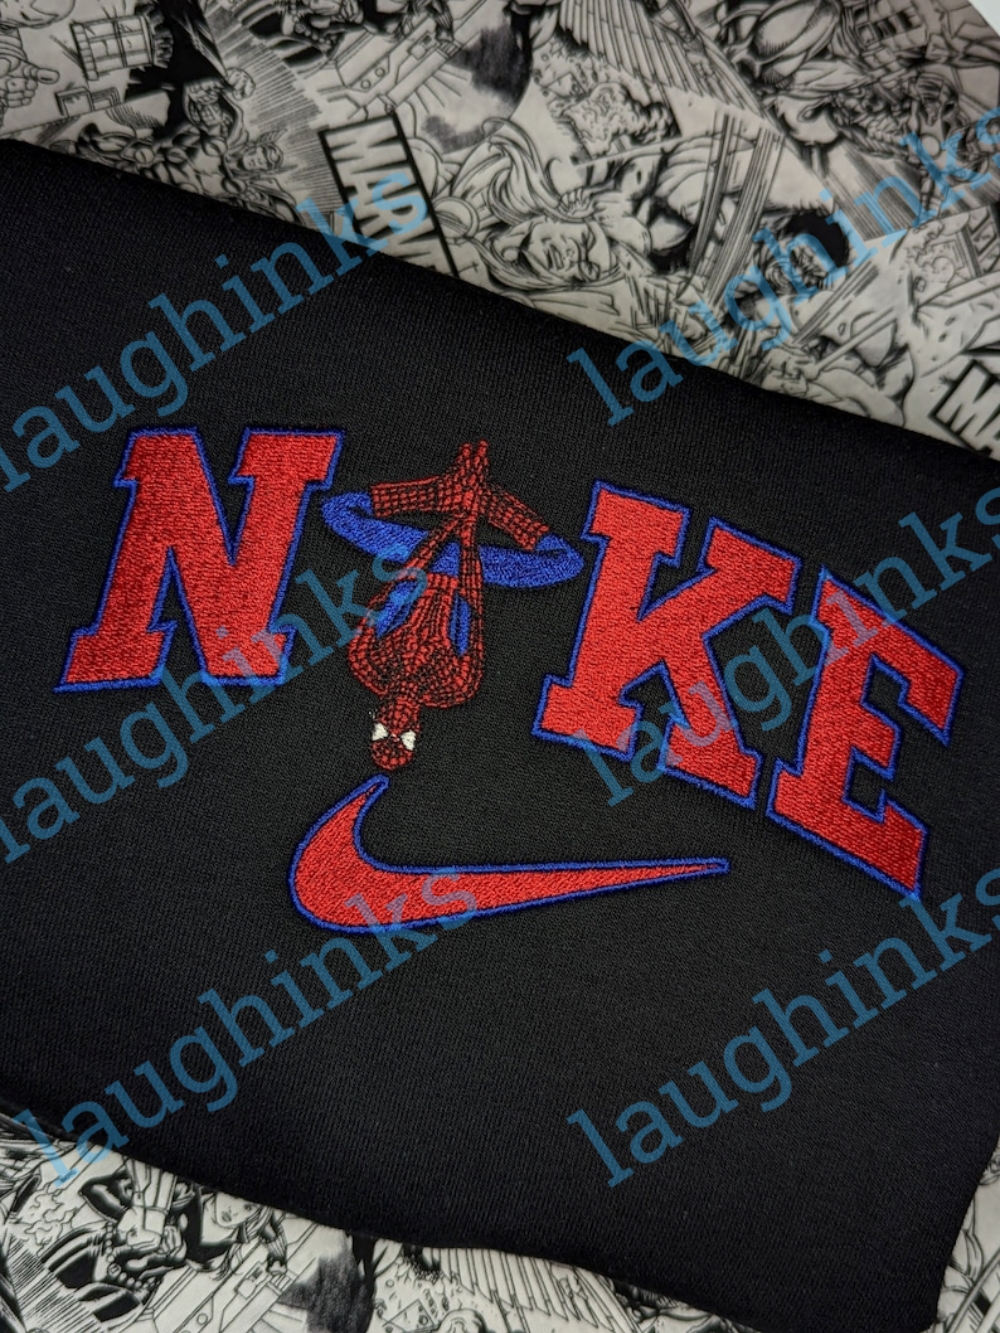 Spiderman Embroidered Sweatshirts Nike Embroidered Crewneck Spiderman Nike Sweatshirt Mens Womens Nike Spiderman Hoodie Embroidered Nike Spiderman Shirt